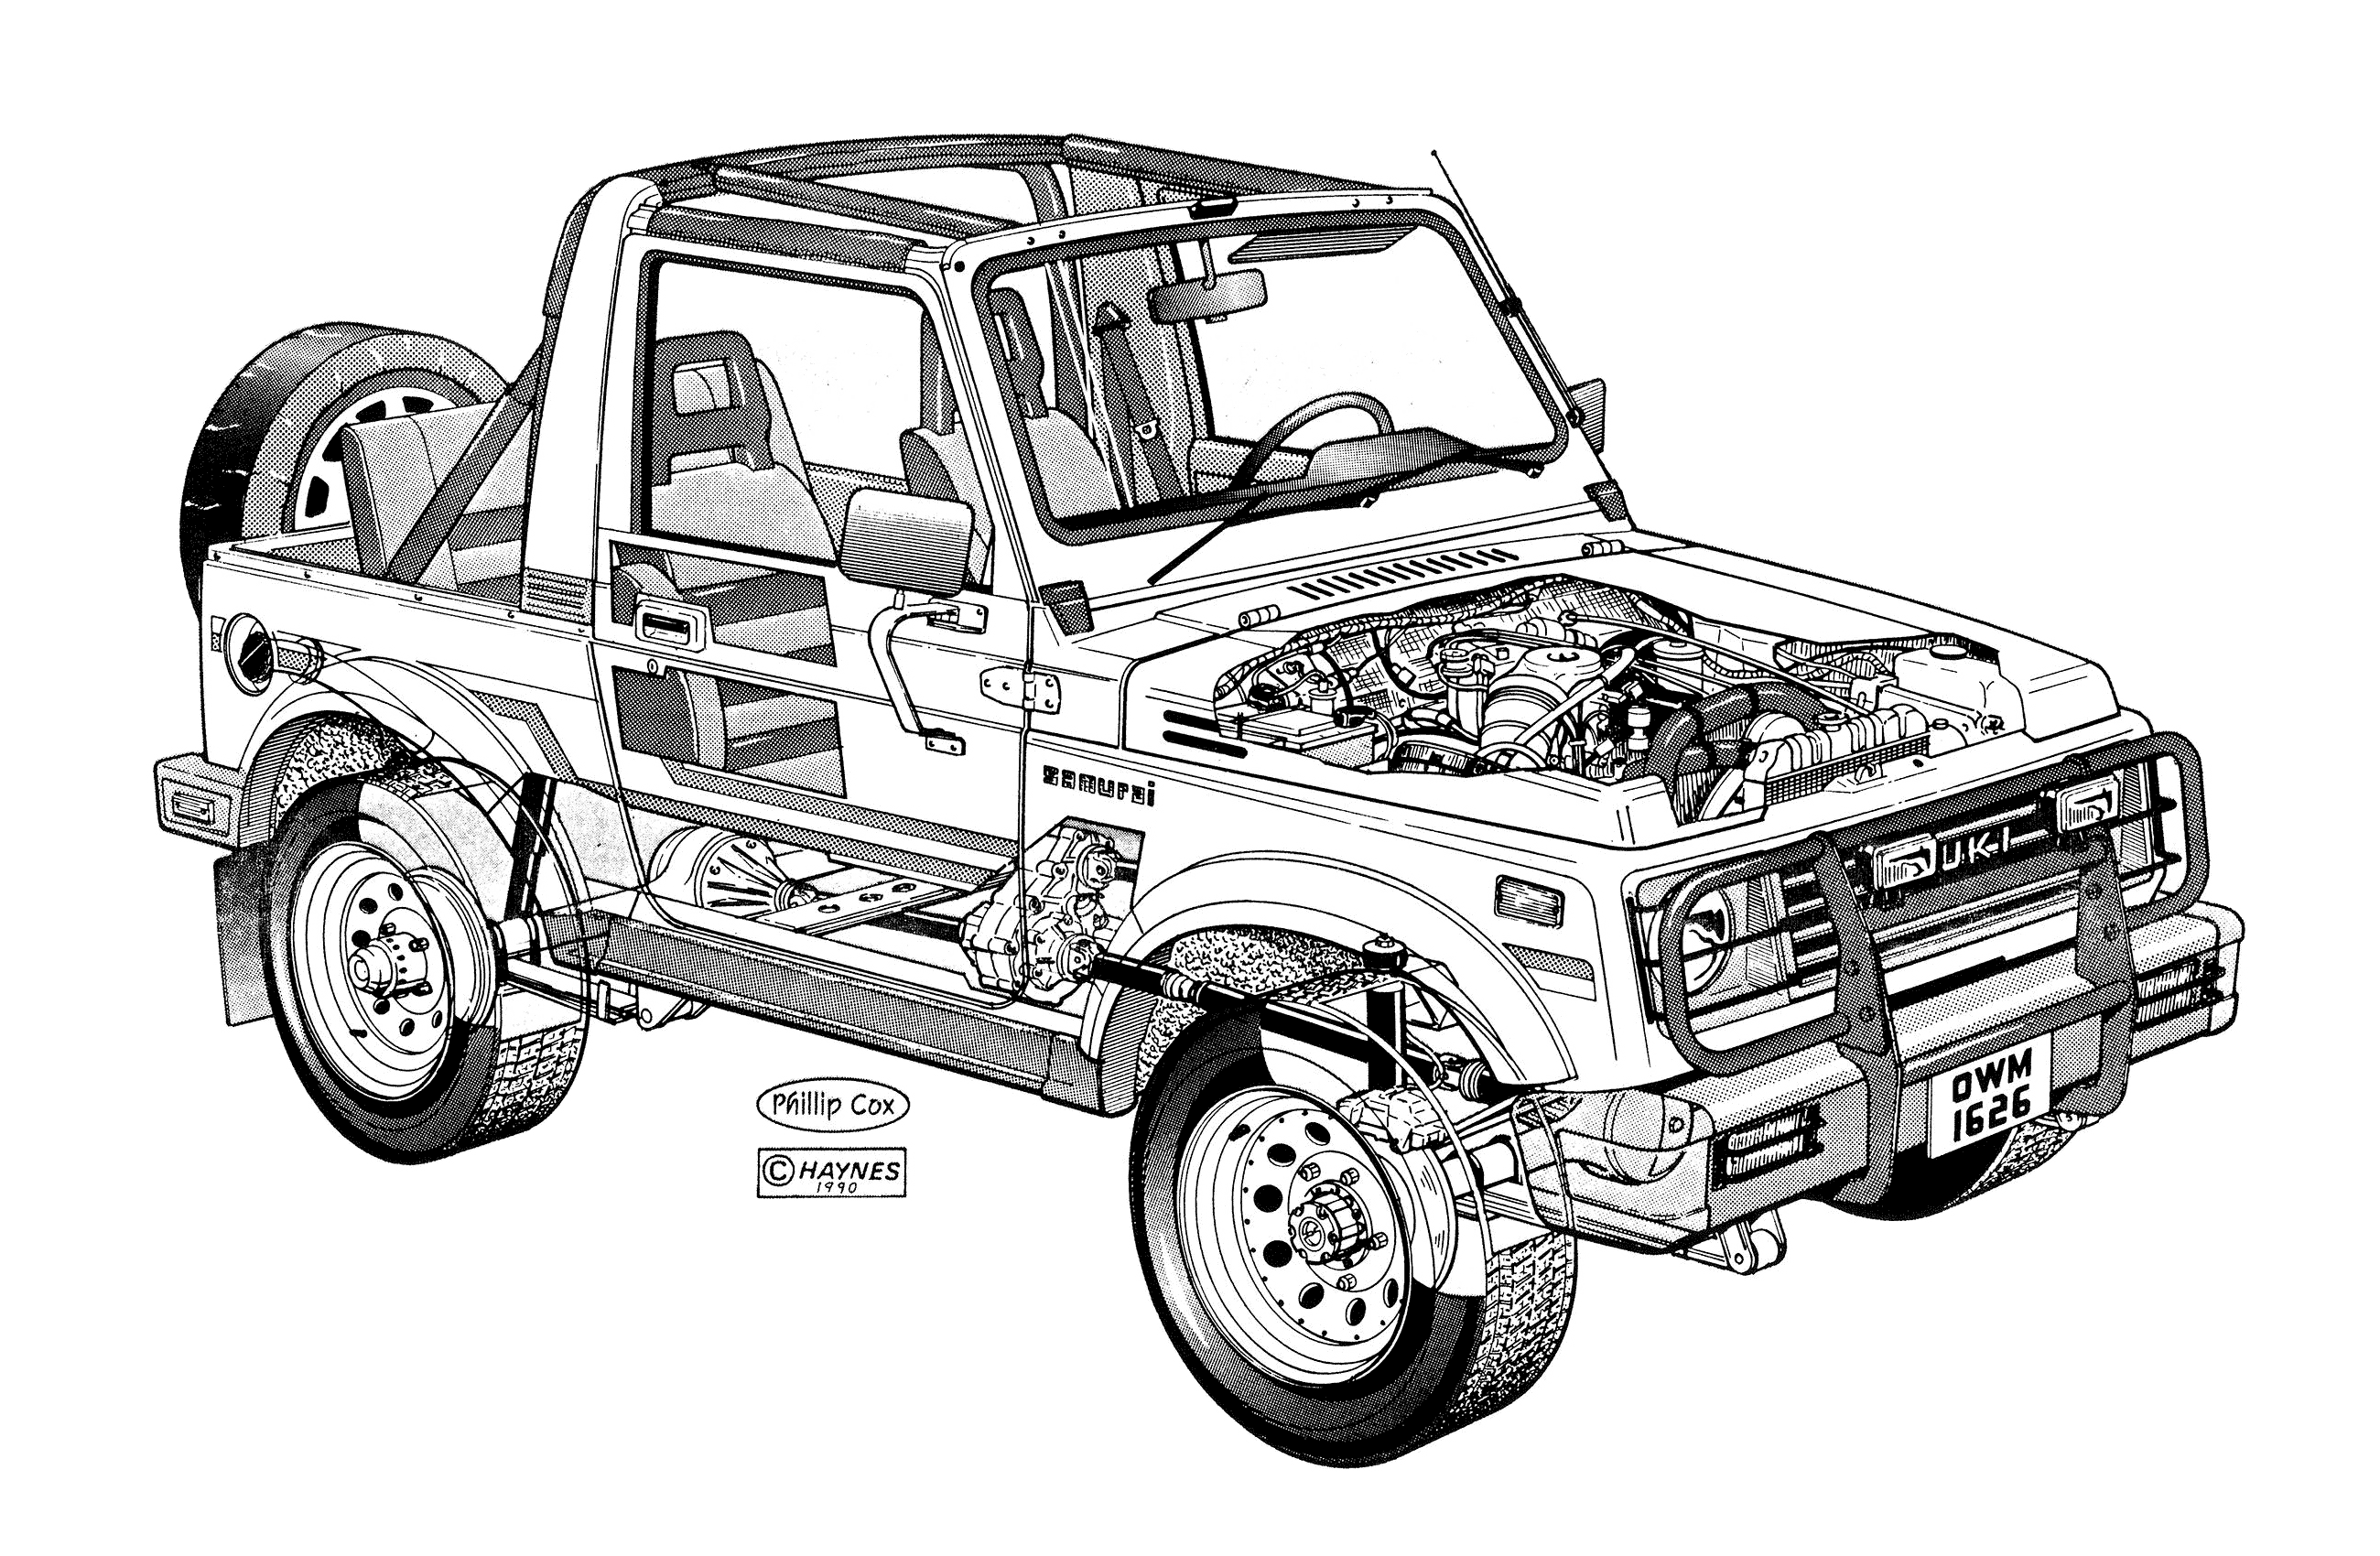 Suzuki Jimny cutaway drawing